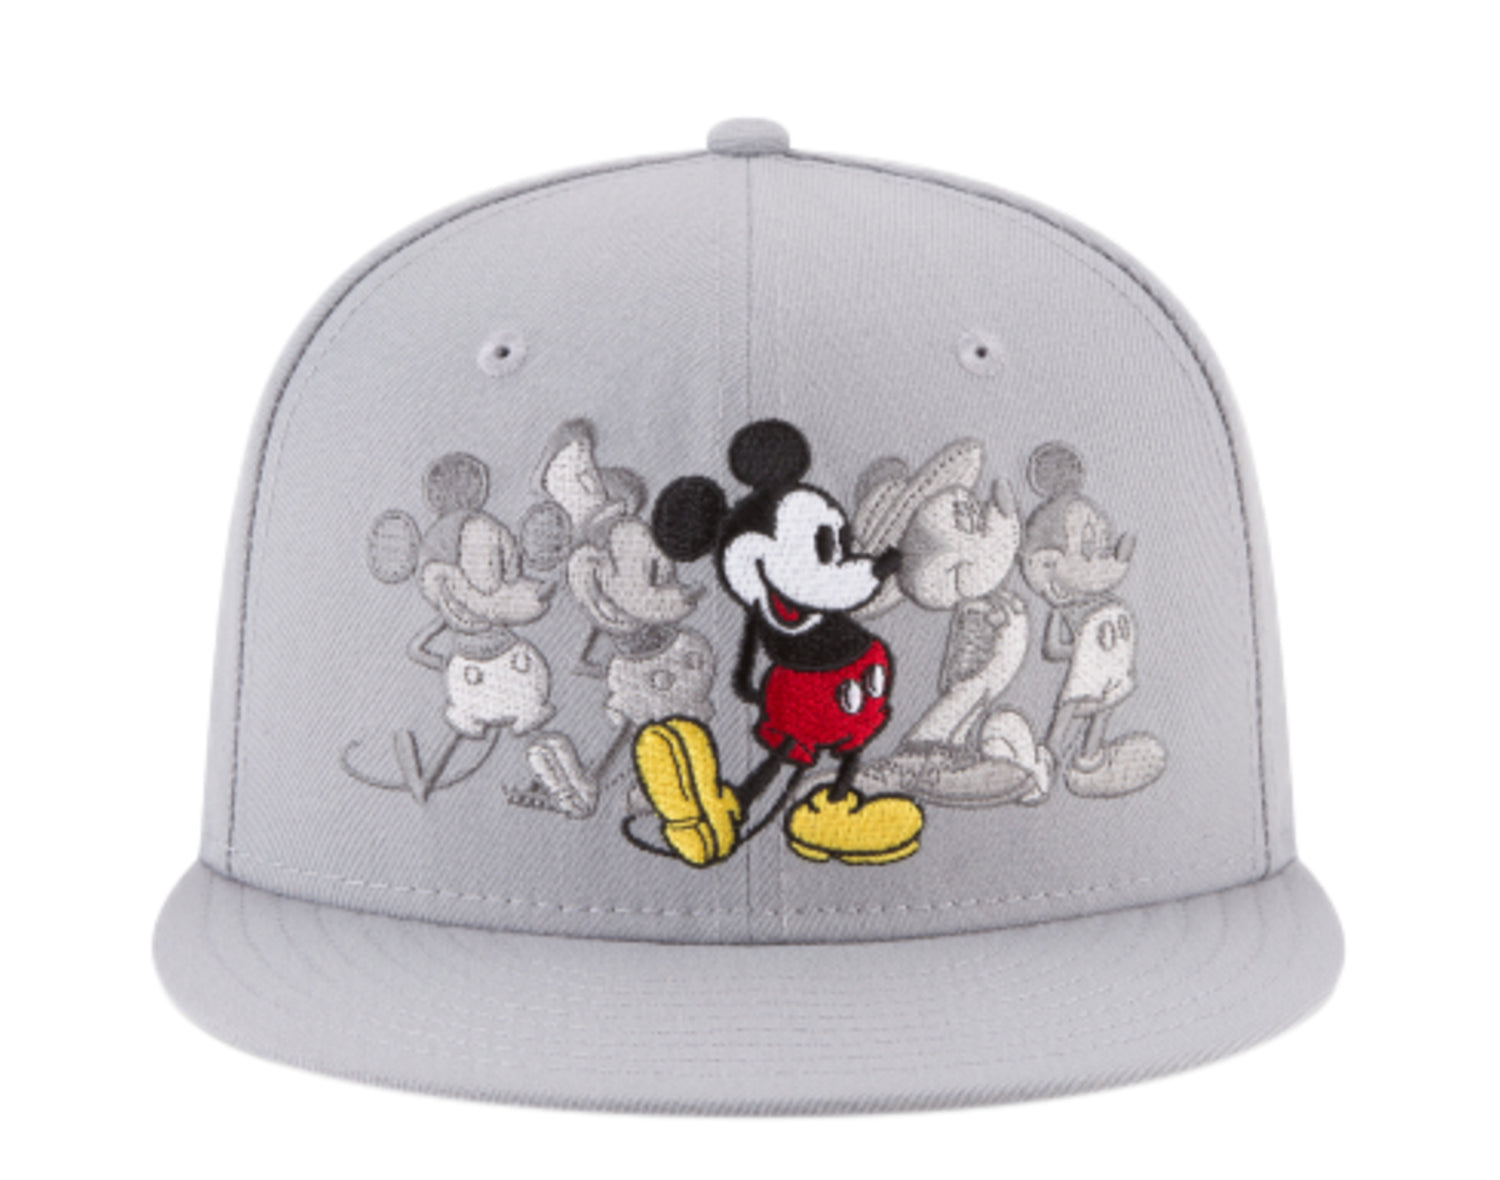 New Era x Disney 9Fifty Mickey Mouse Evolution Of Mickey Snapback Hat